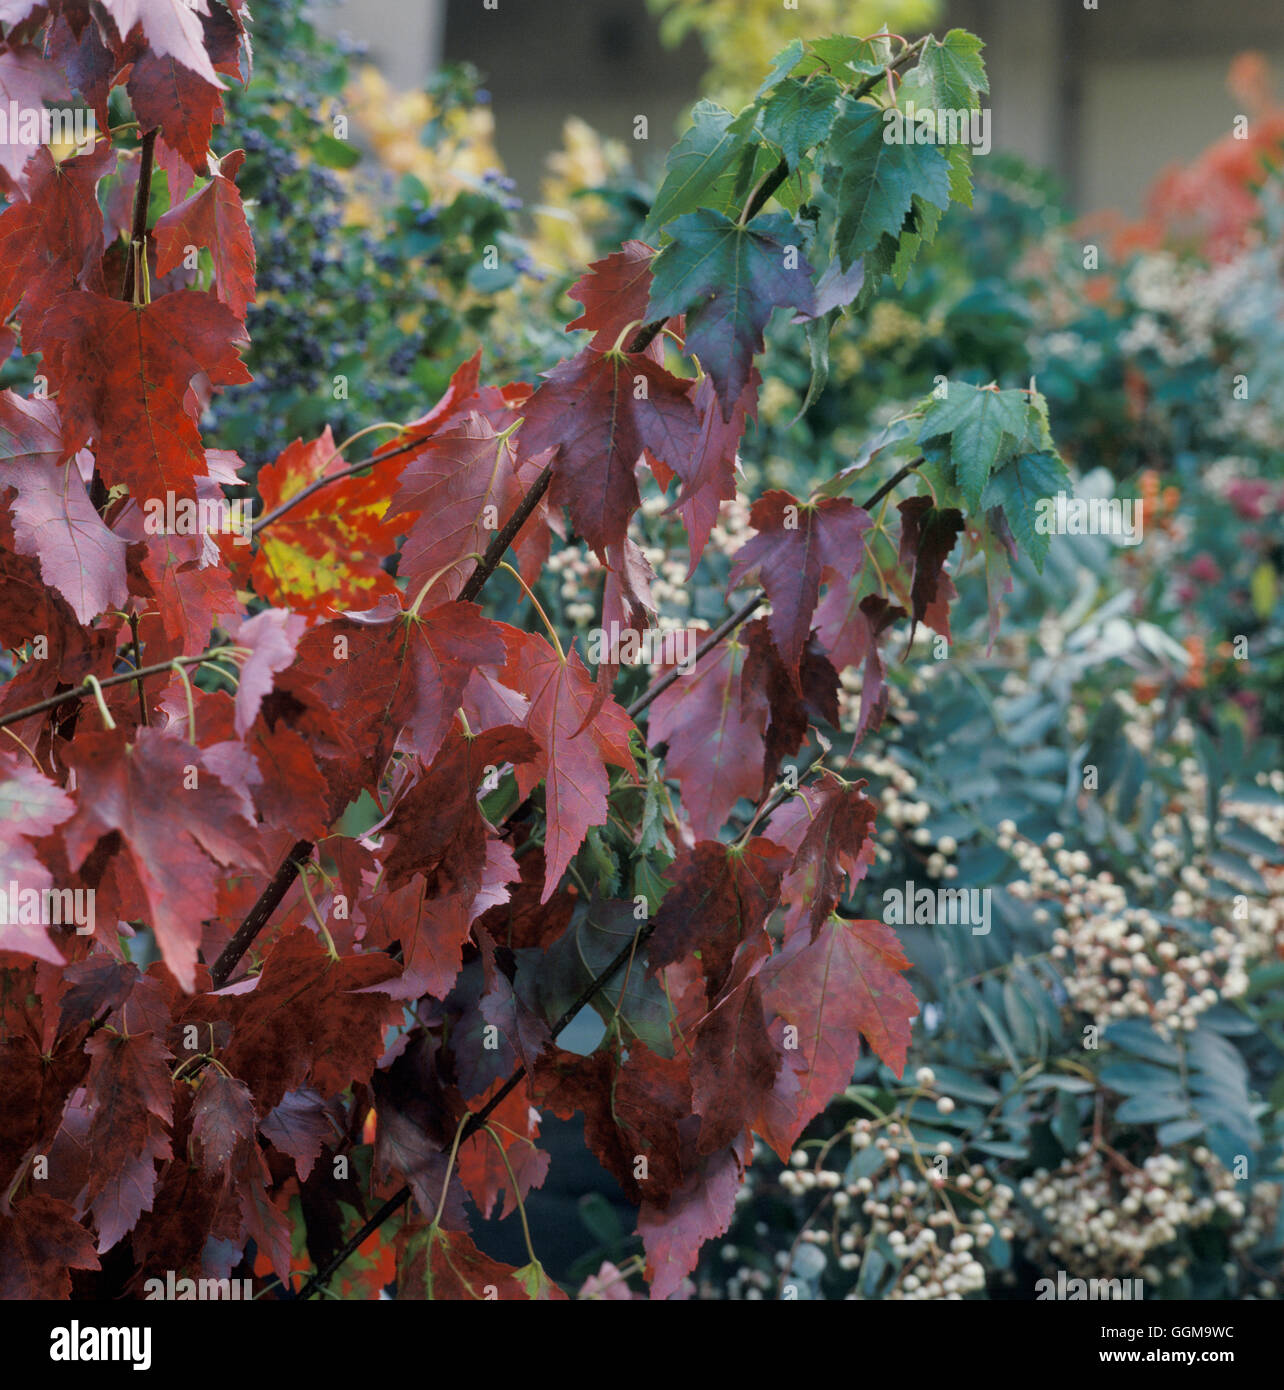 Acer Rubrum 'Schlesingeri' Ref: UMW_117860_0006 © Fotos Gartenbau/Photoshot Stockfoto